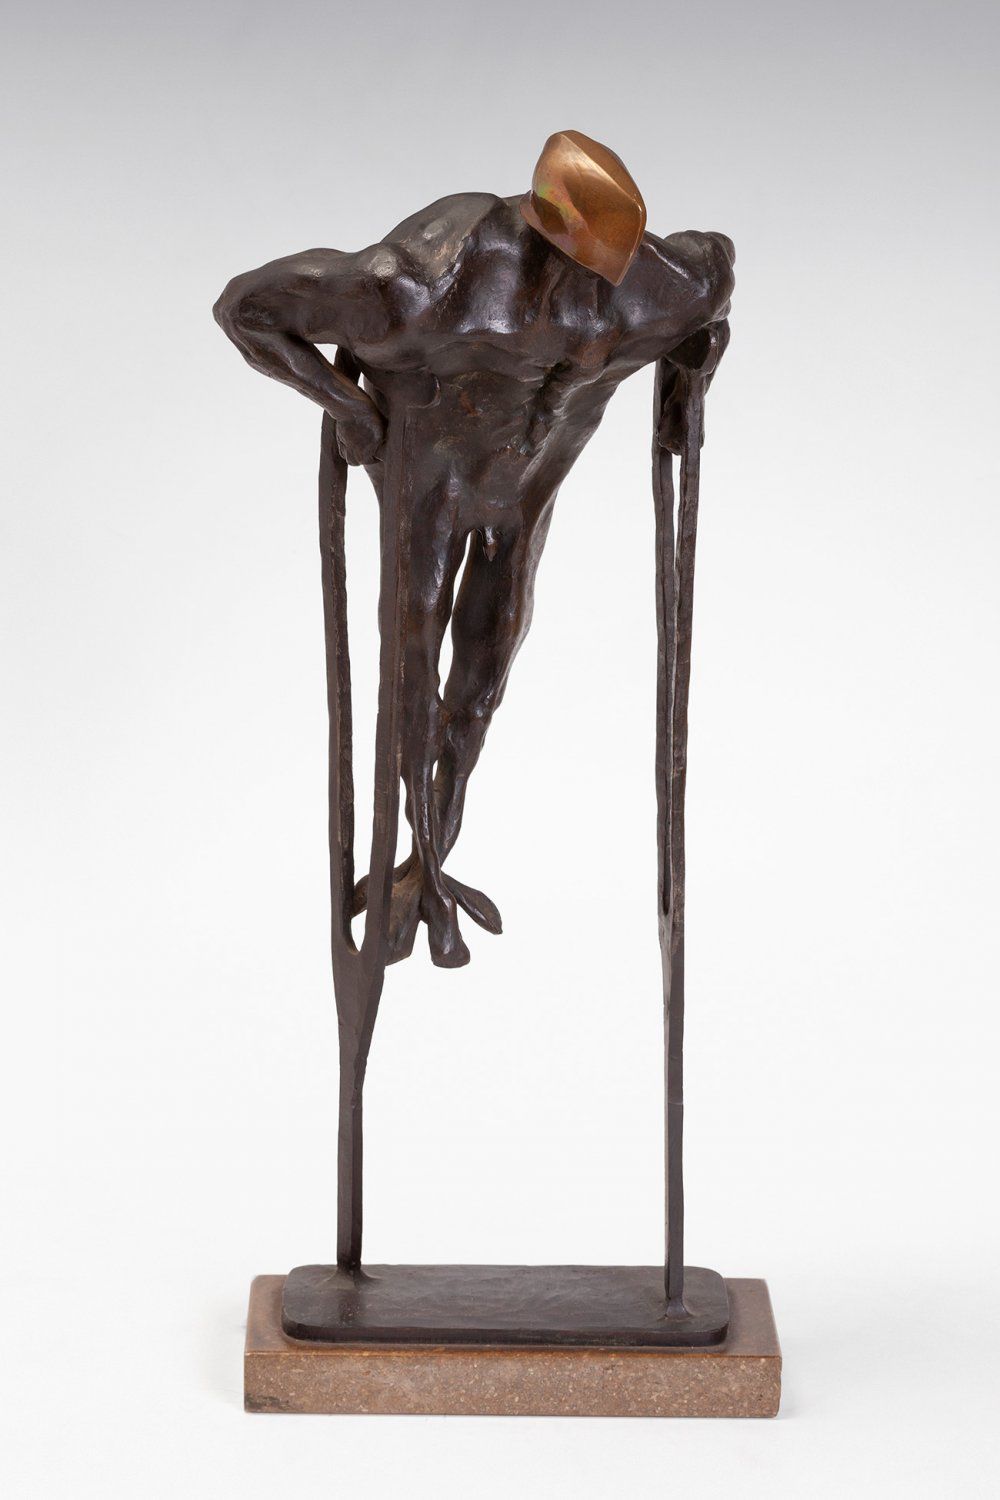 Null 罗伊-希夫林 (1937)
青铜雕塑。大理石底座
底座上有签名
56 x 21 x 8厘米；59 x 25 x 10 x 10厘米
罗伊-希夫林在纽约&hellip;